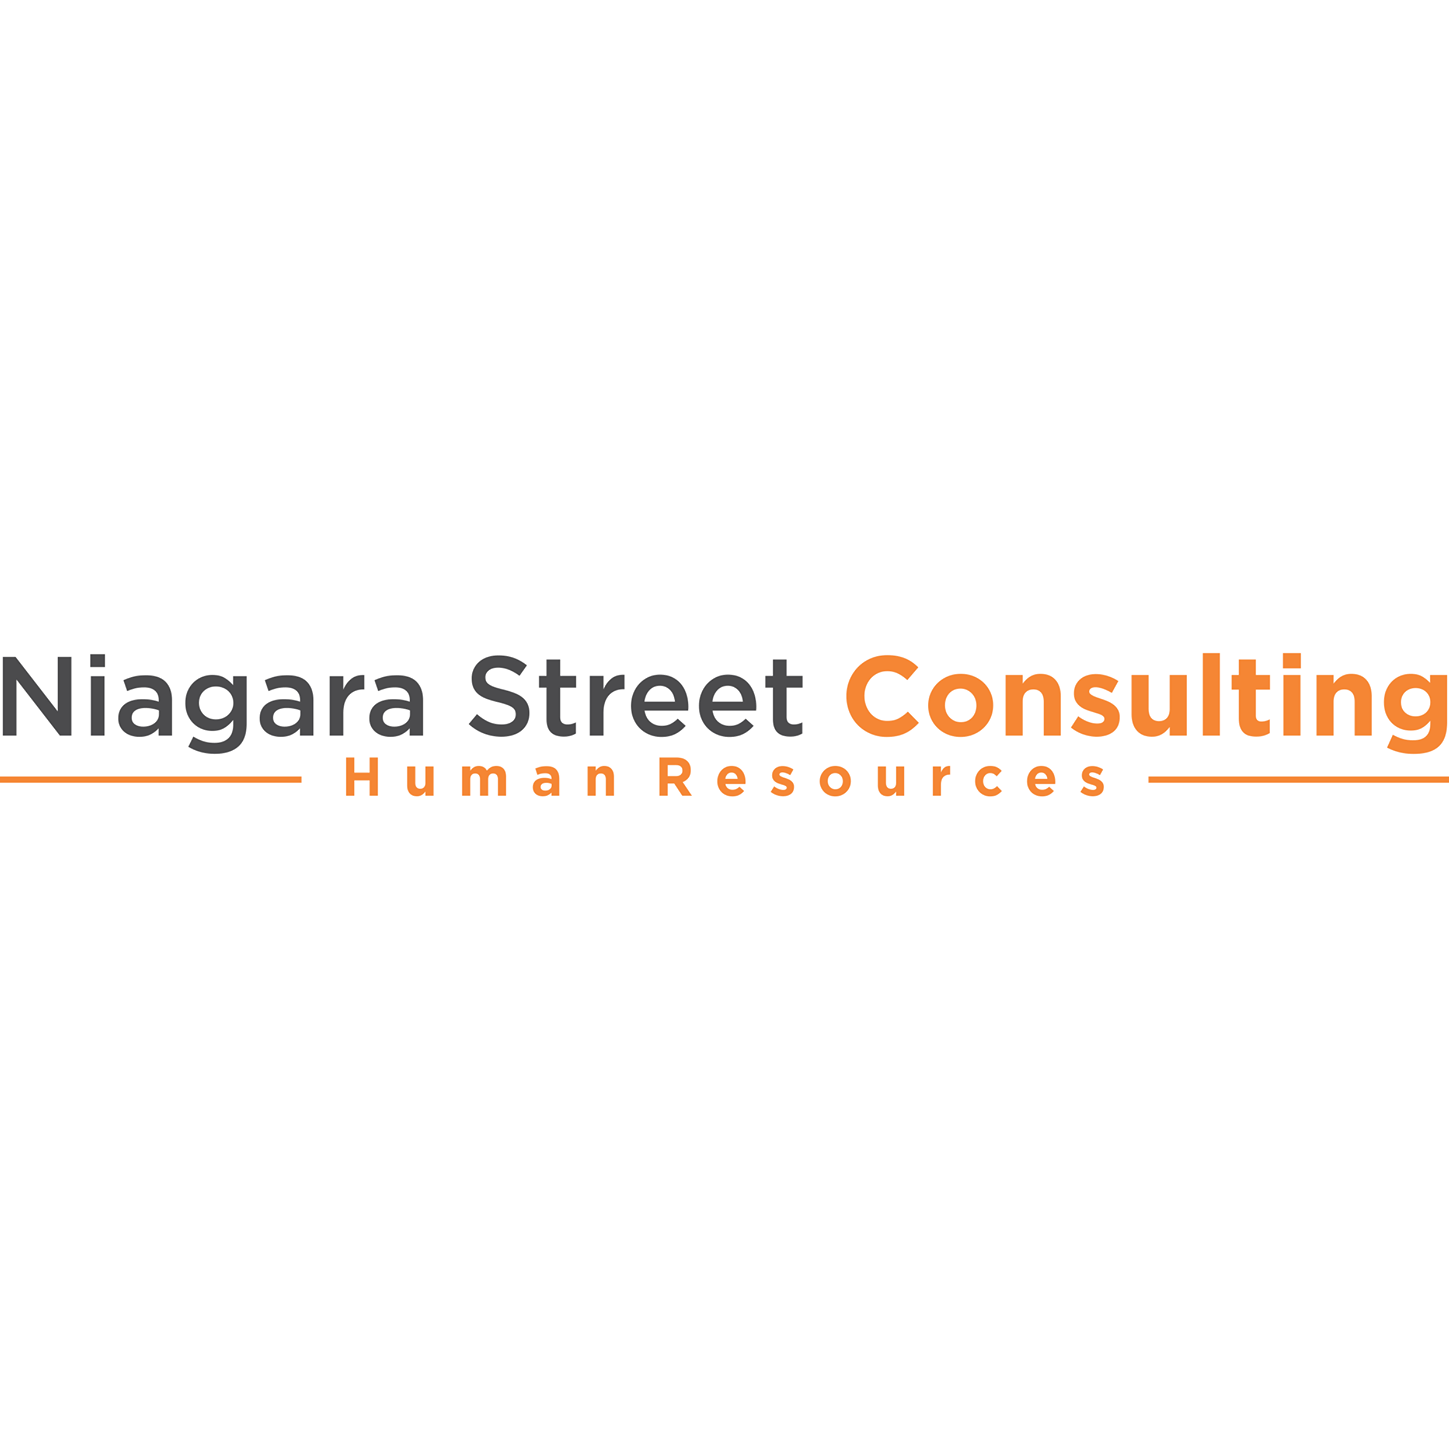 Niagara Street Consulting